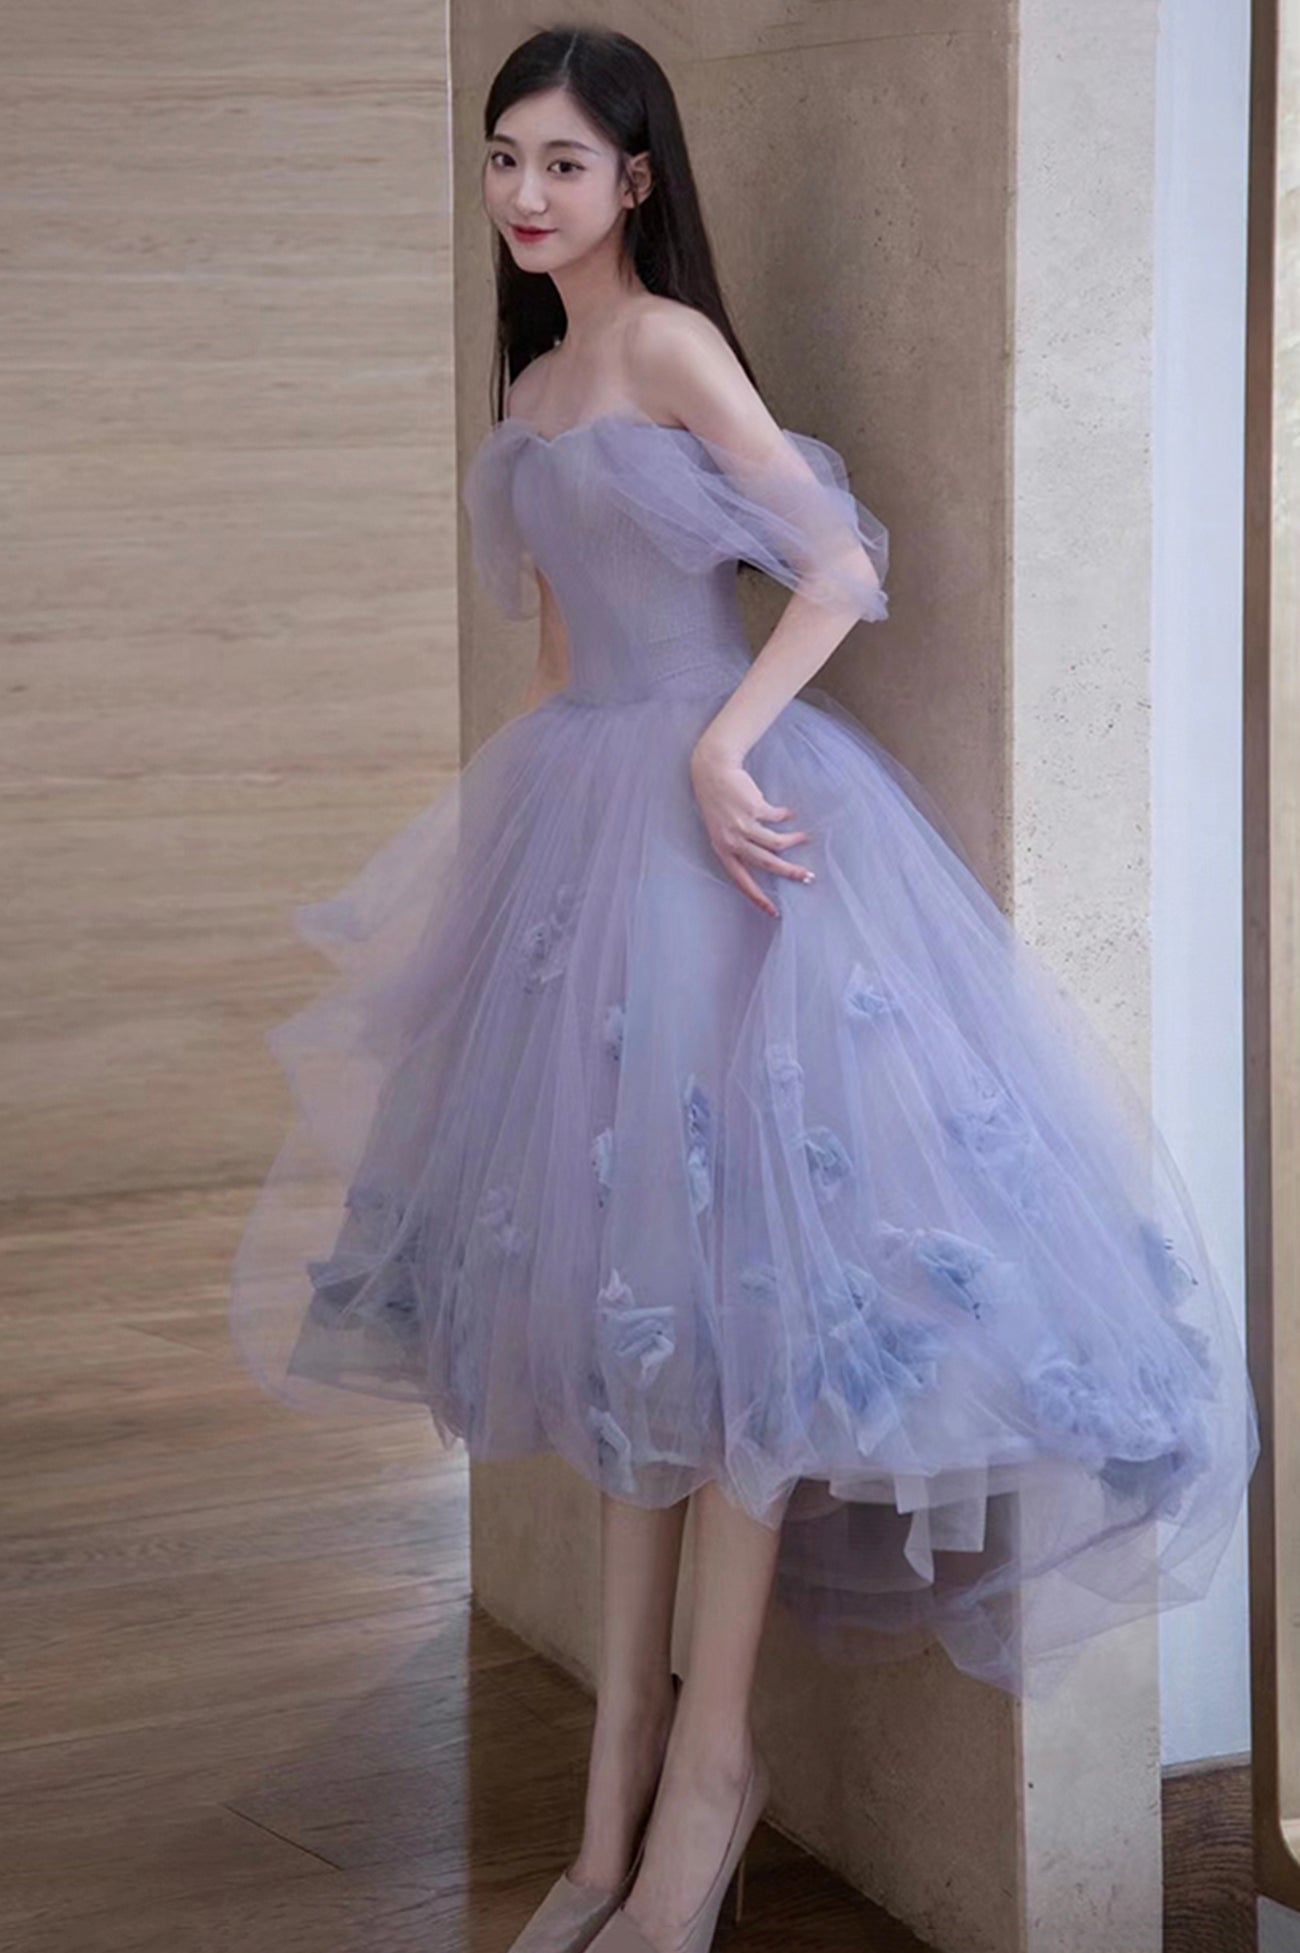 Cute Tulle Short A-Line Prom Dress, Purple Off the Shoulder Evening Dress